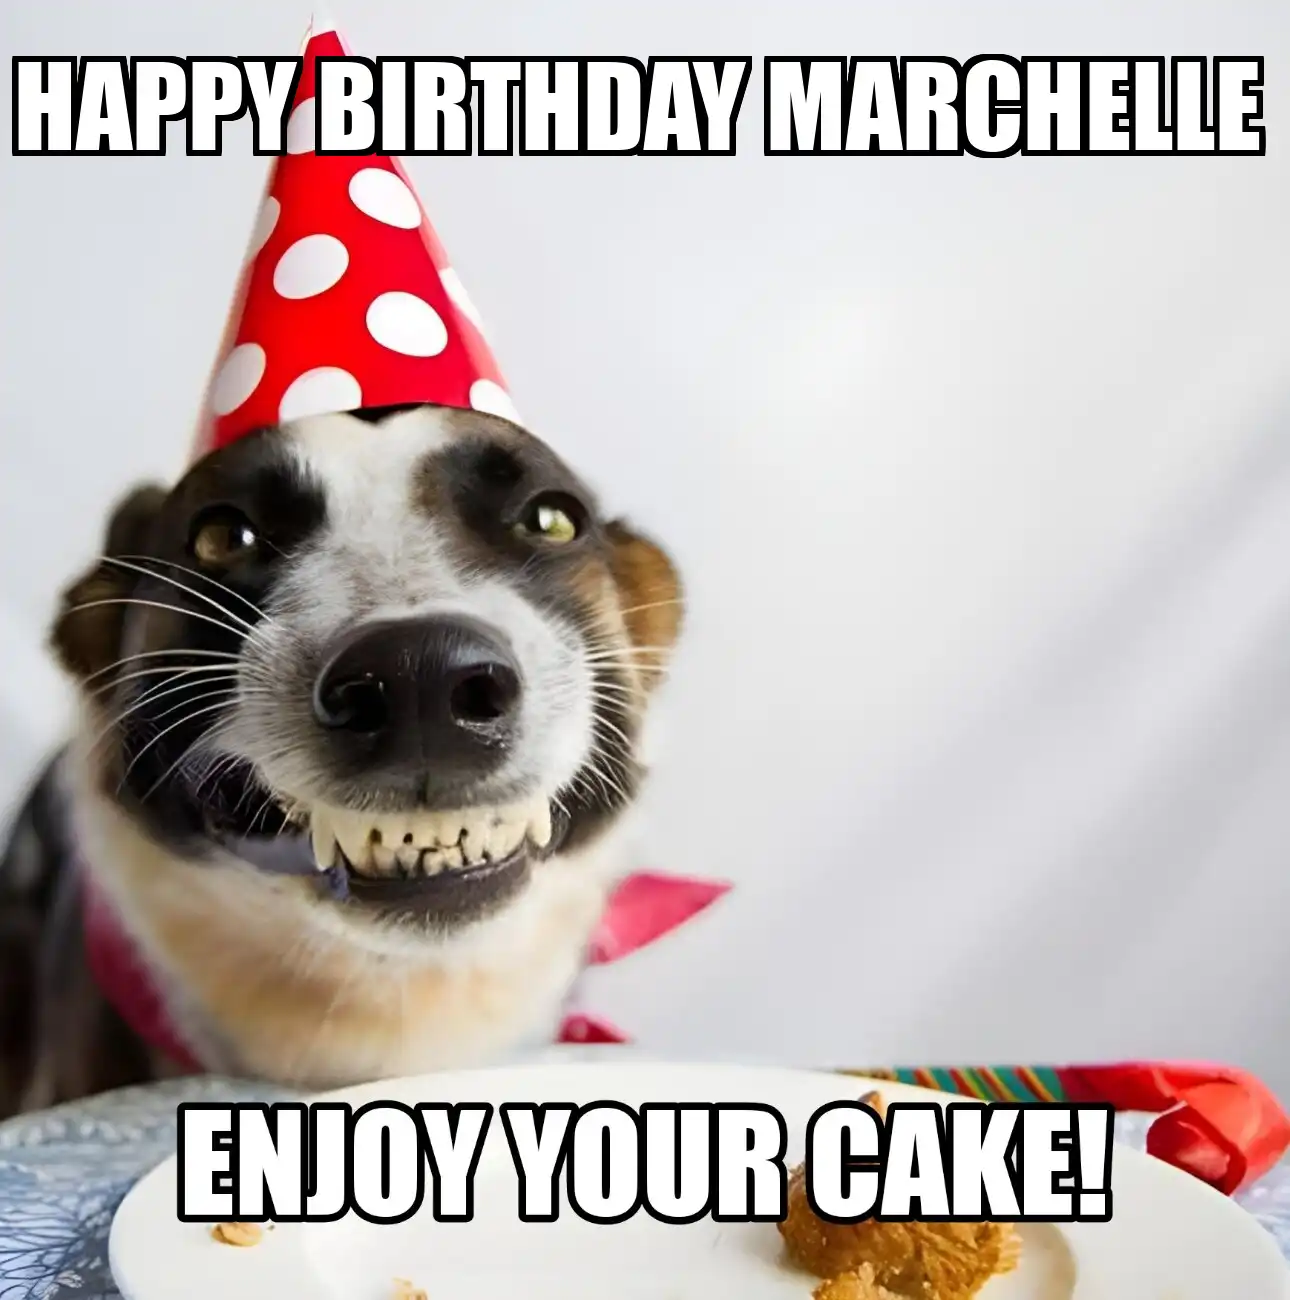 Happy Birthday Marchelle Enjoy Your Cake Dog Meme